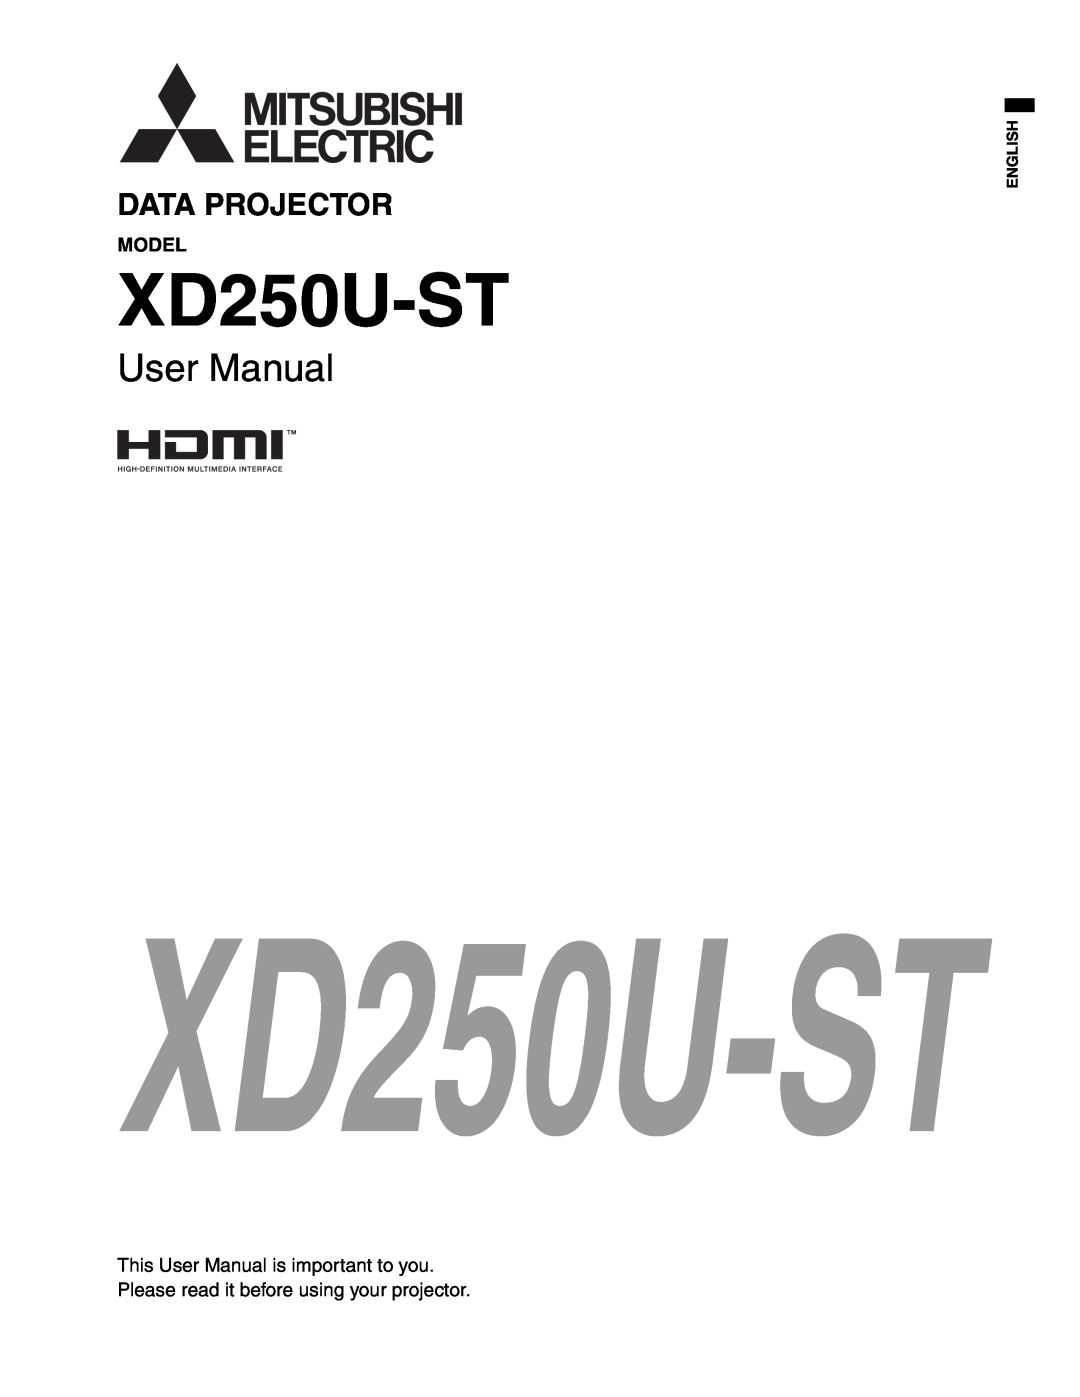 Mitsubishi Electronics XD250U-ST manual crystal clear display solutions, Display Solutions, ANSI lumens, Quick Menu, 25001 